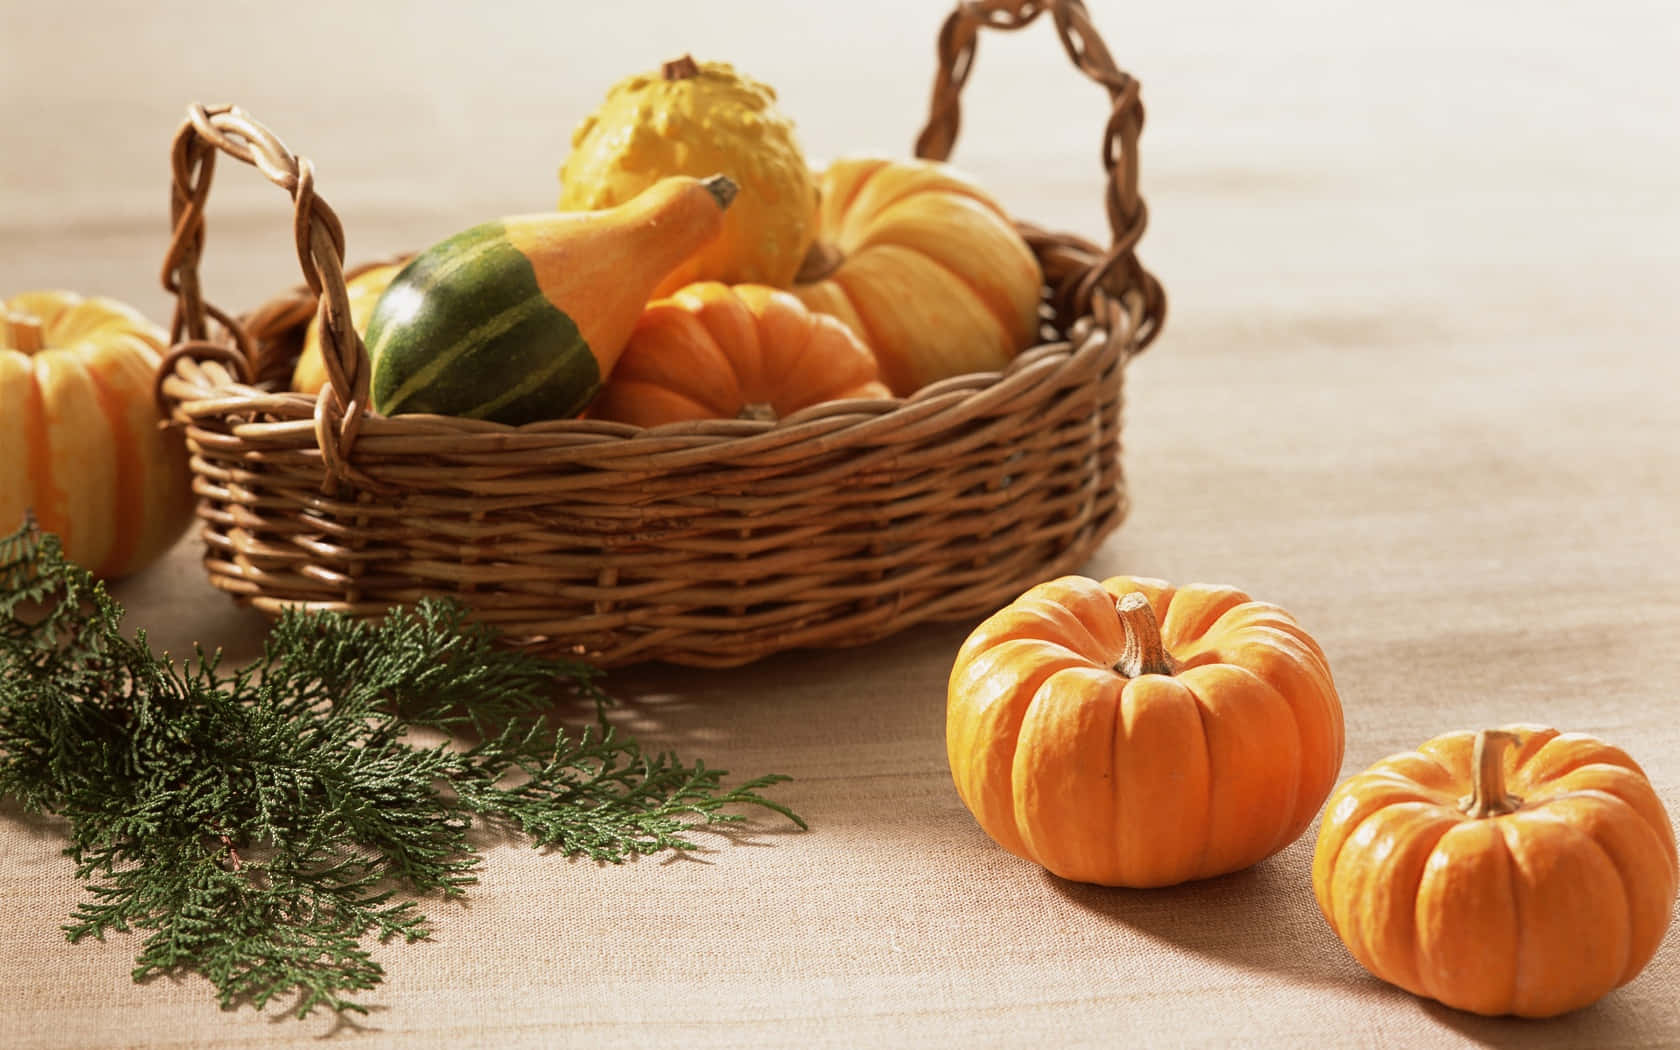 A beautiful fall pumpkin display against a vibrant autumn backdrop